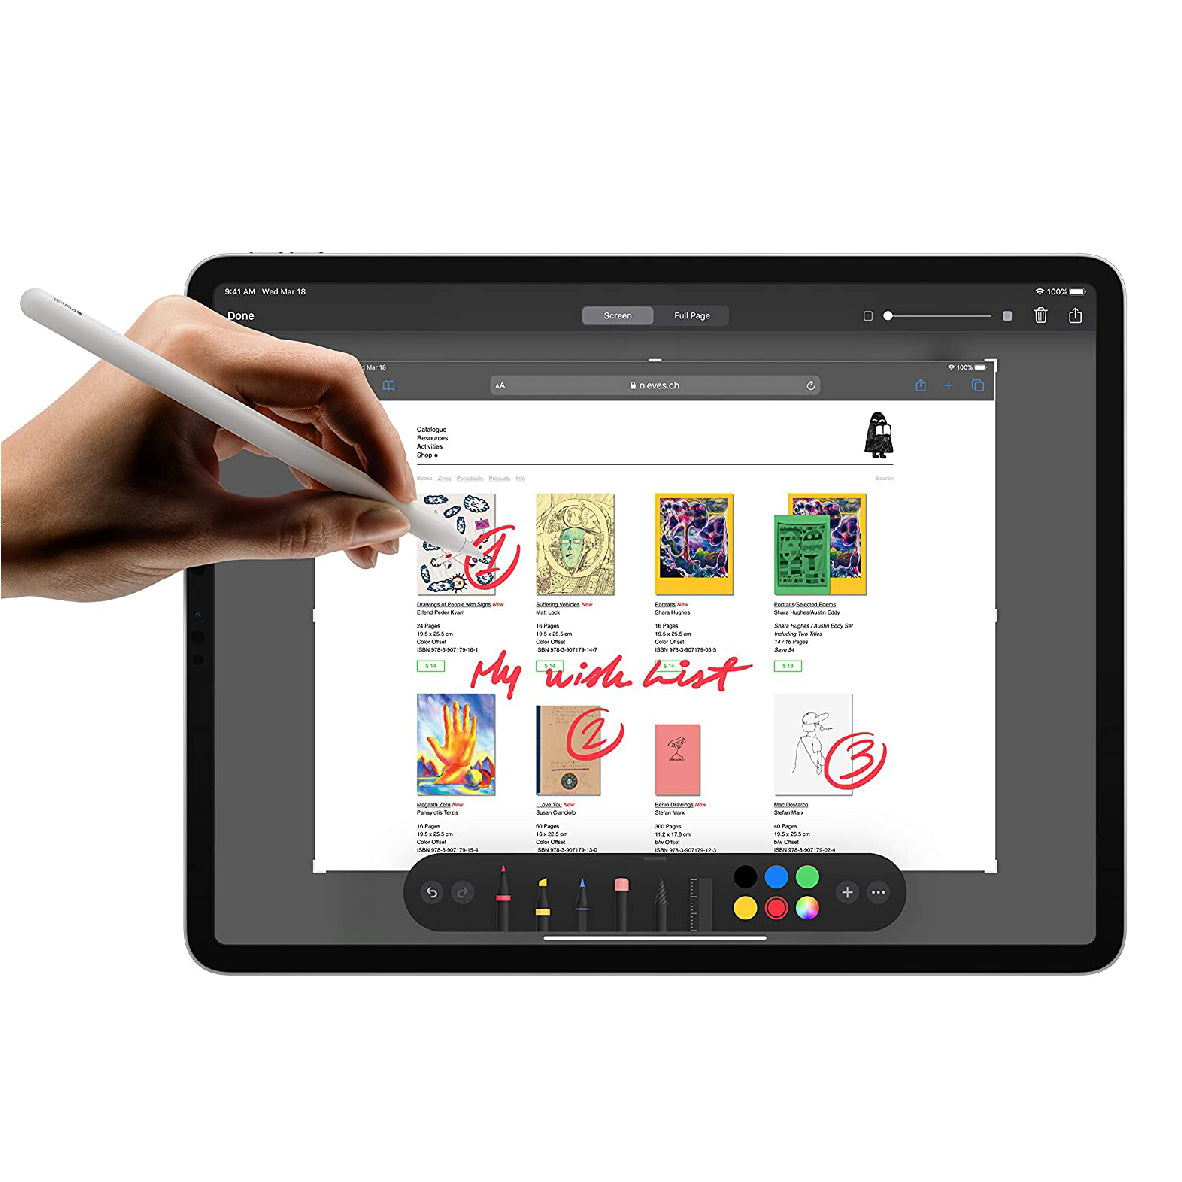 Apple iPad Pro (11-inch, Wi-Fi, 1TB) - Space Gray (2nd Generation - 2020 Model)